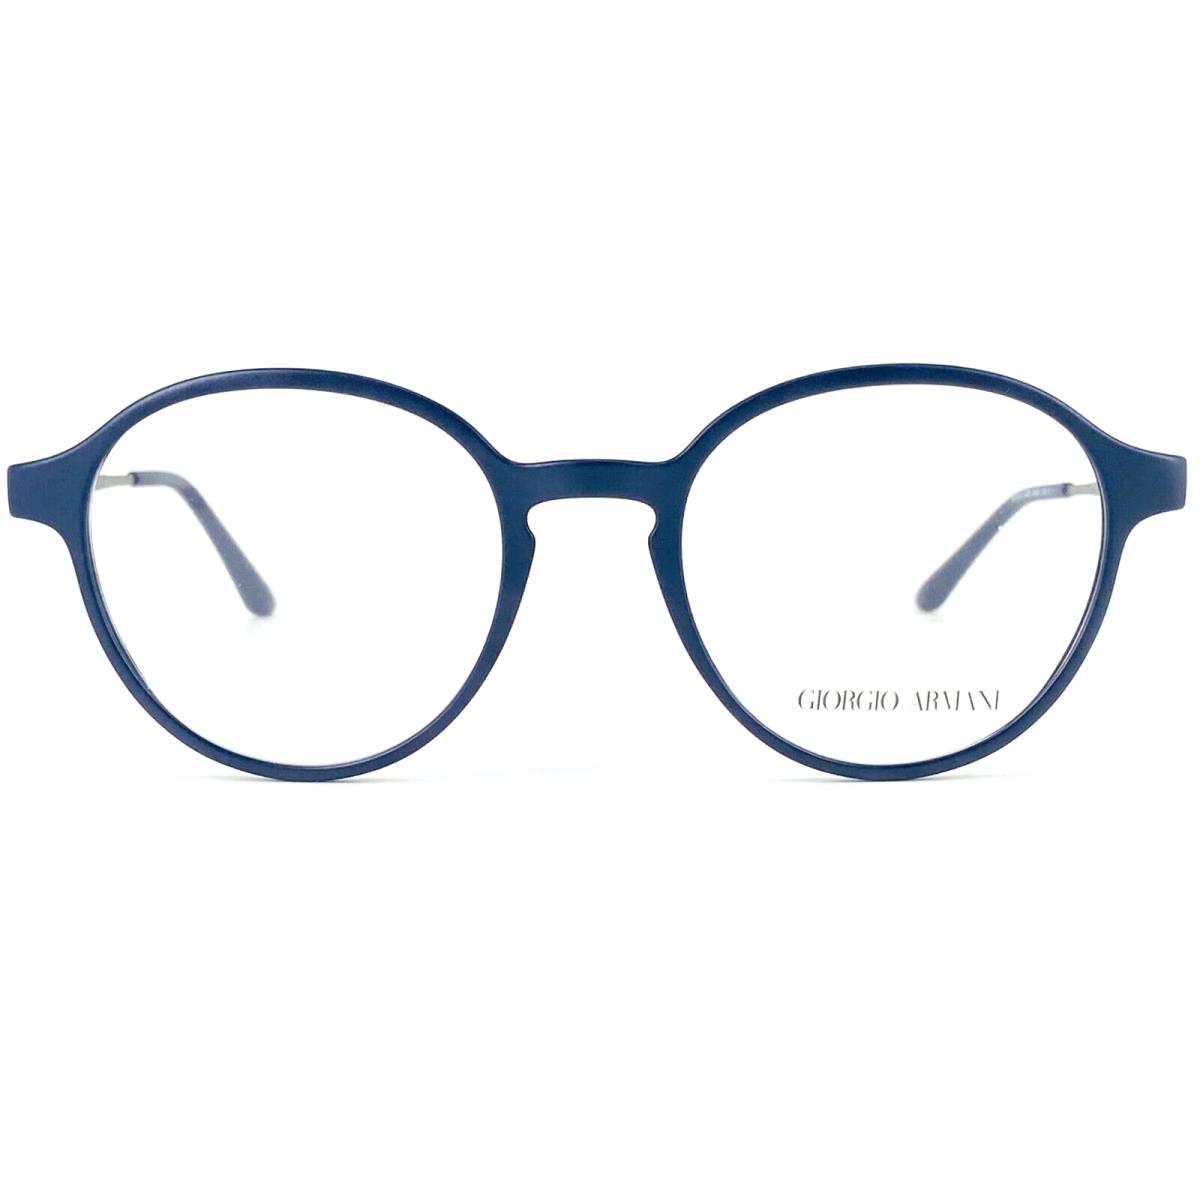 Giorgio Armani eyeglasses  - 5059 Matte Navy , Blue Frame 0